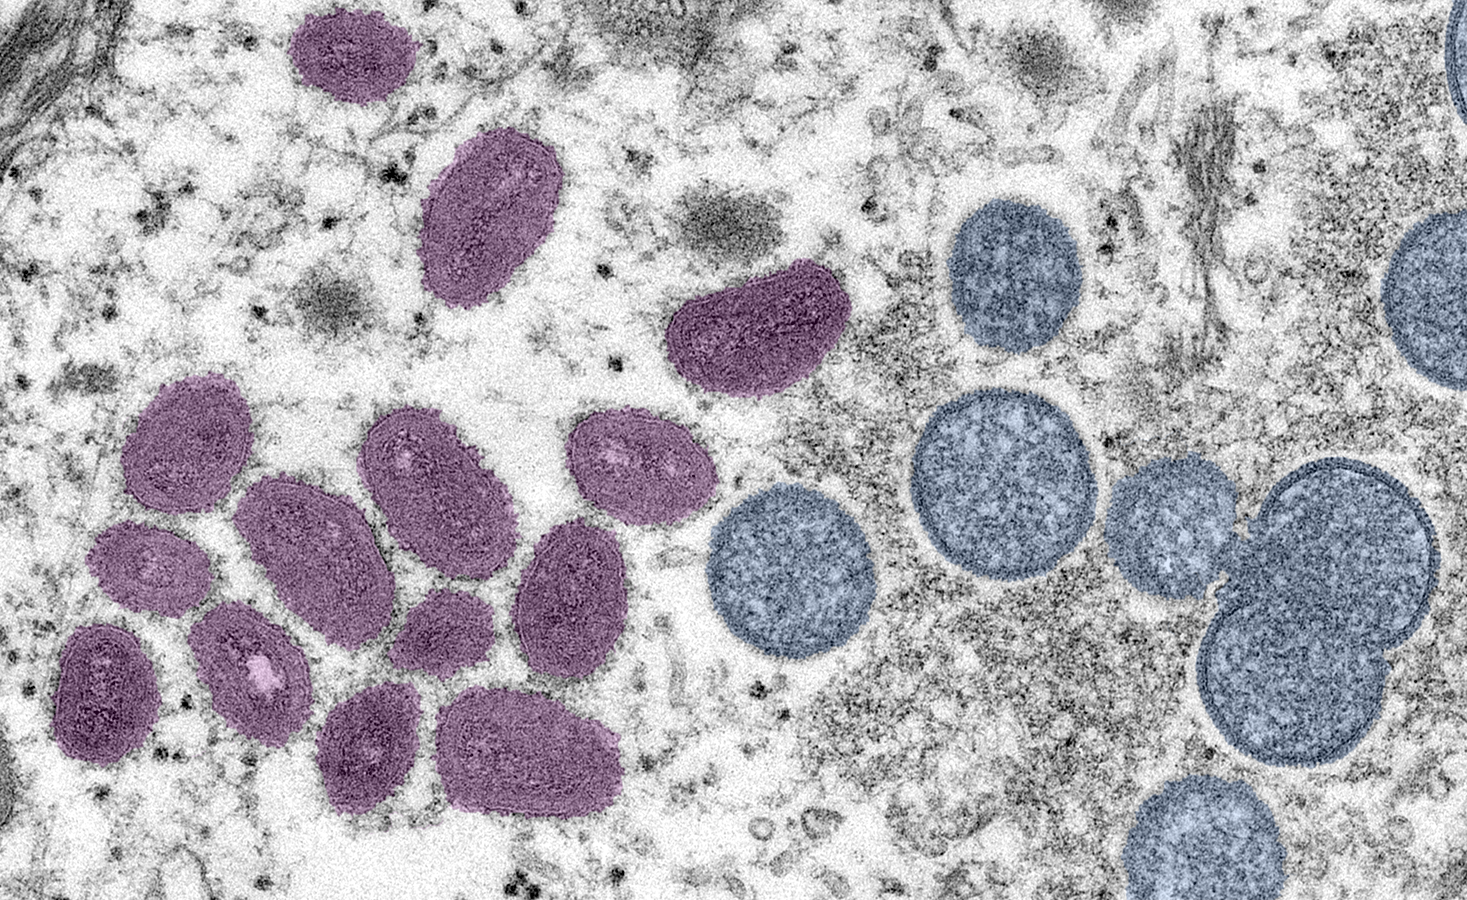 investigators found potentially infectious monkeypox virus DNA in saliva and semen.